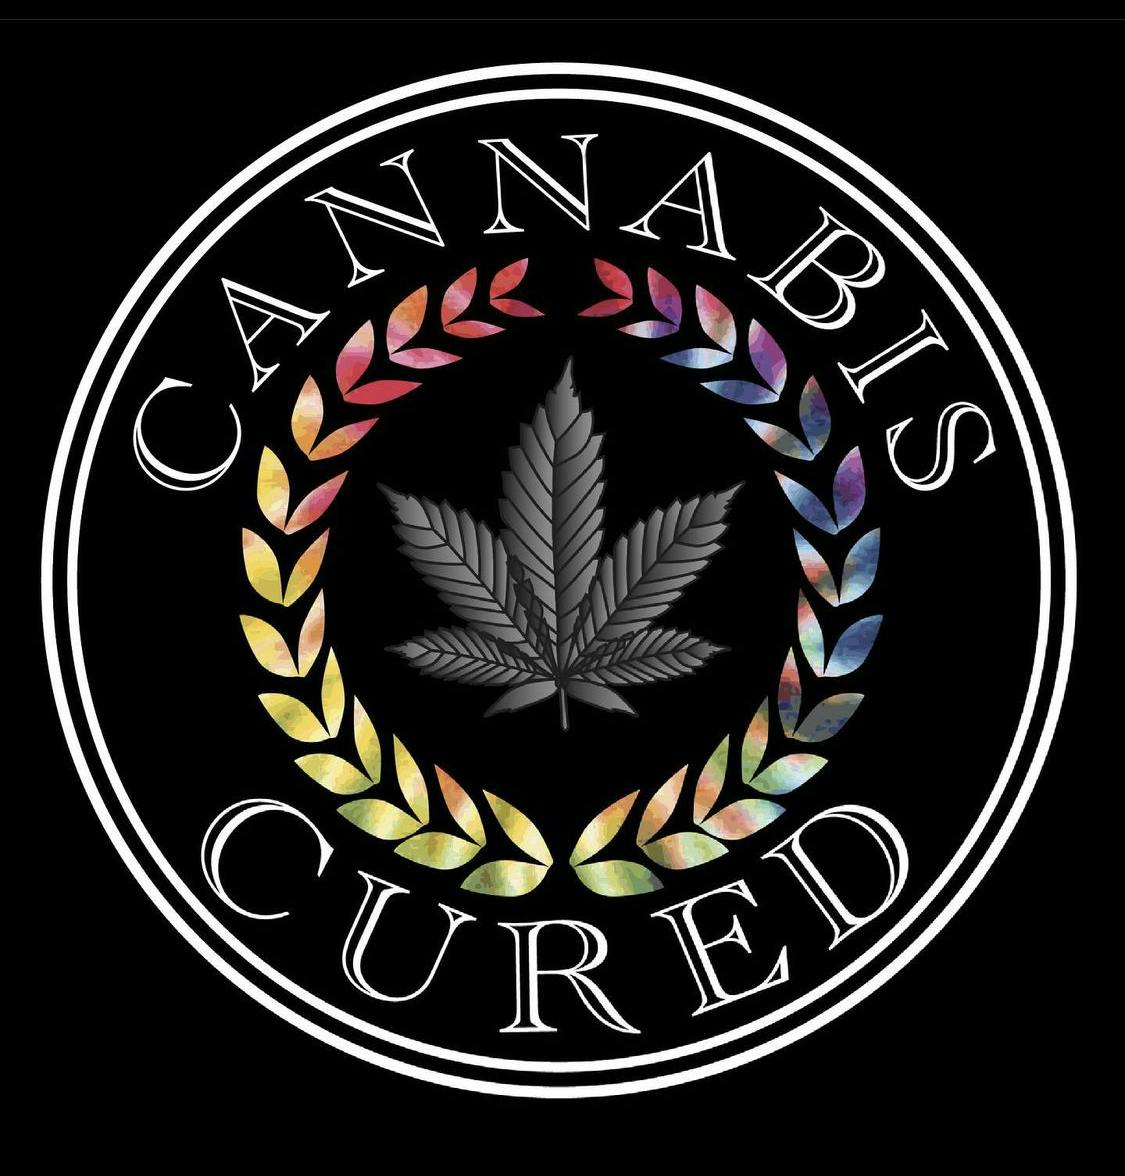 Cannabis Cured Sugarloaf Recreational Weed Dispensary logo